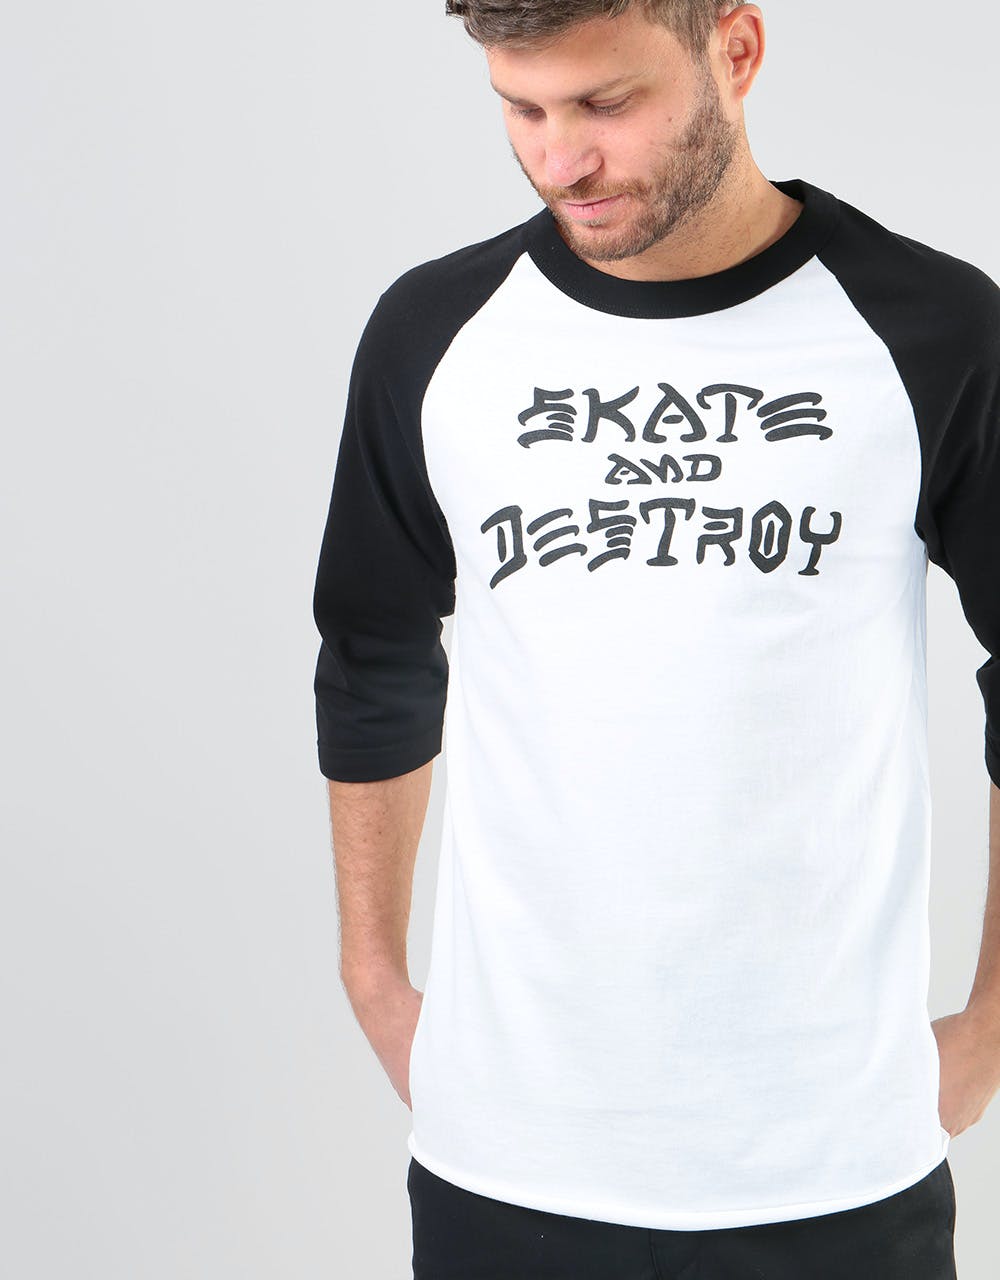 Thrasher Skate and Destroy Raglan T-Shirt - White/Black